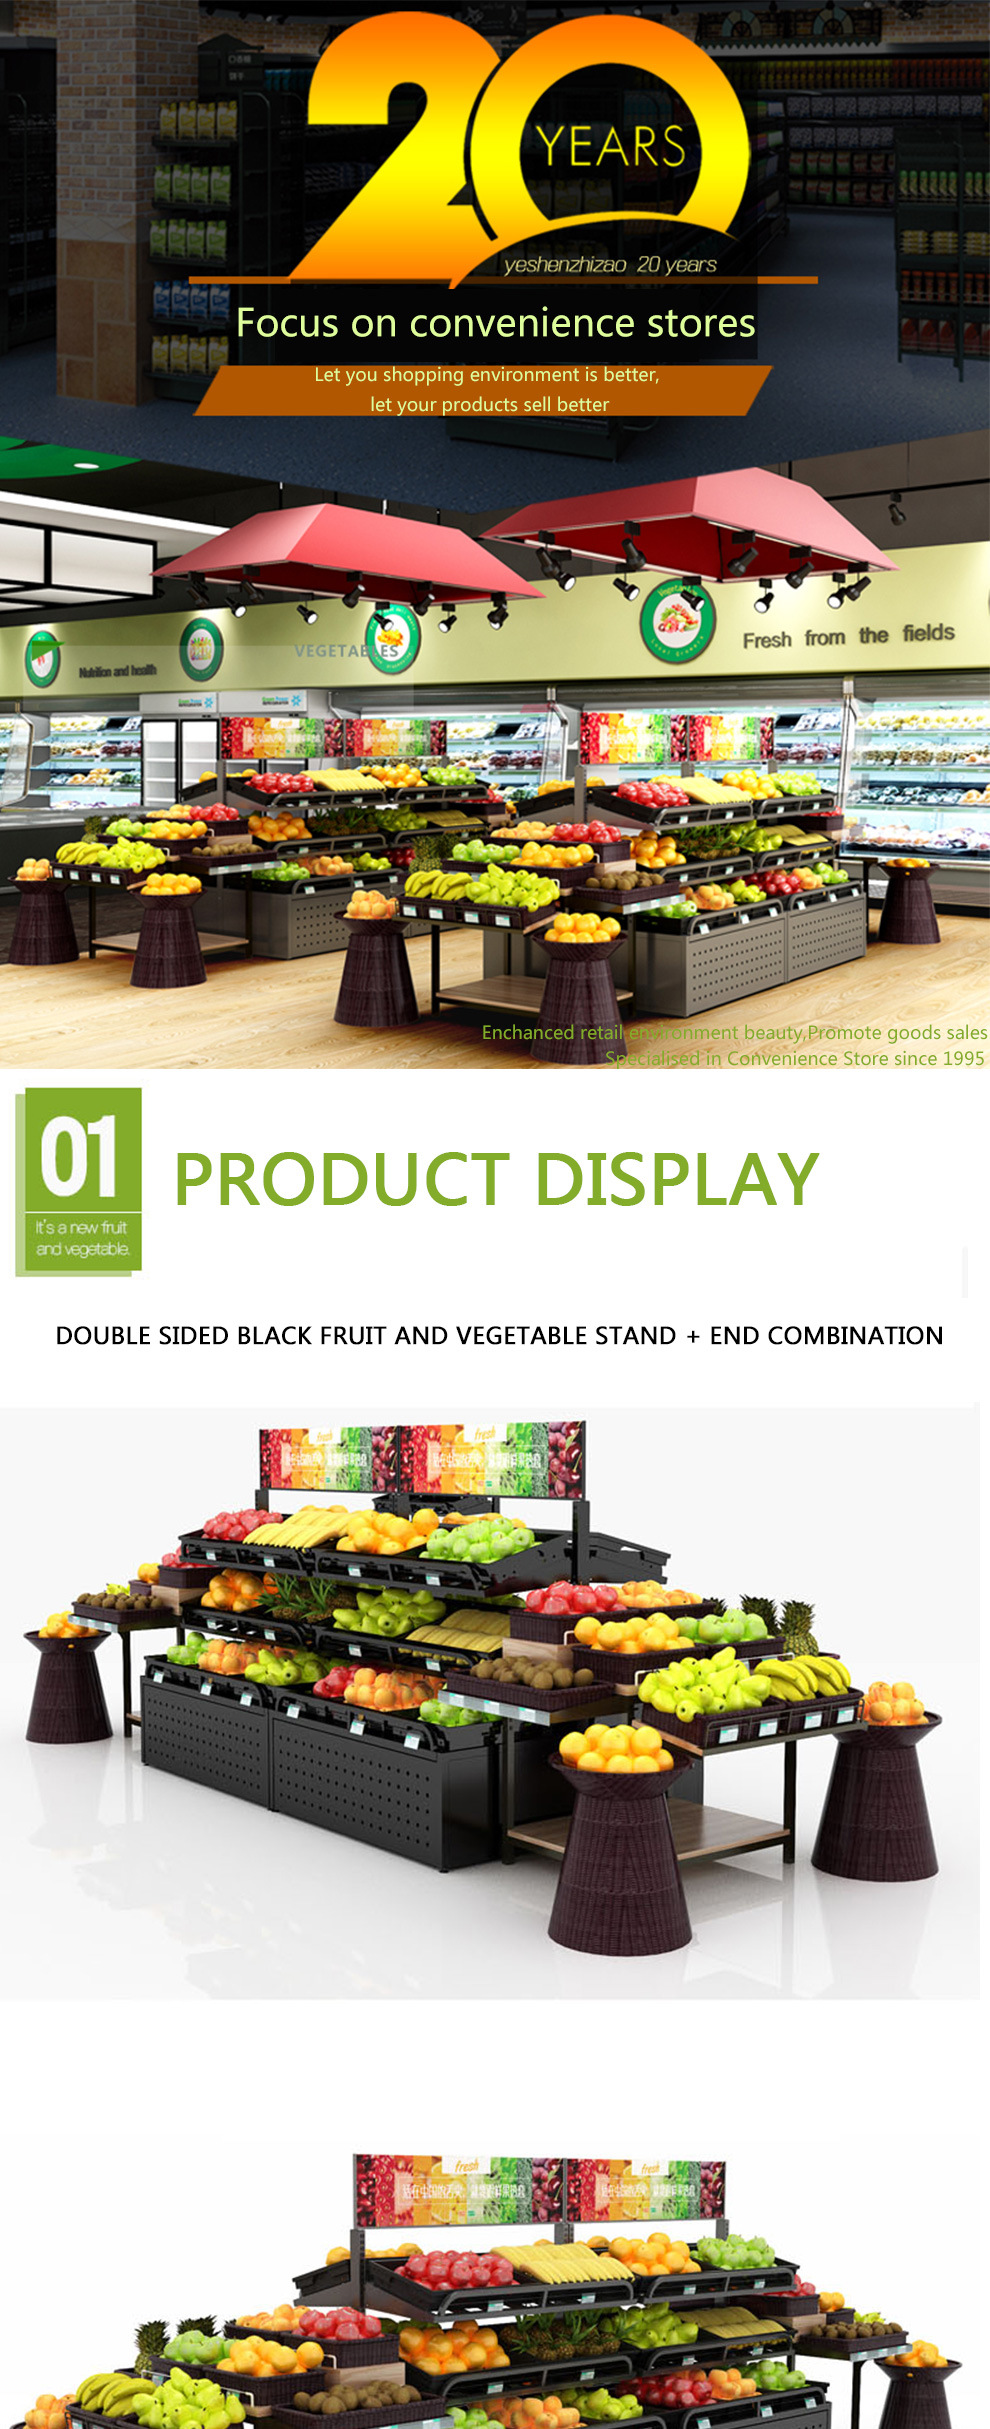 Sylish Custom Metal Fixed Fruit and Vegetable Display Stand